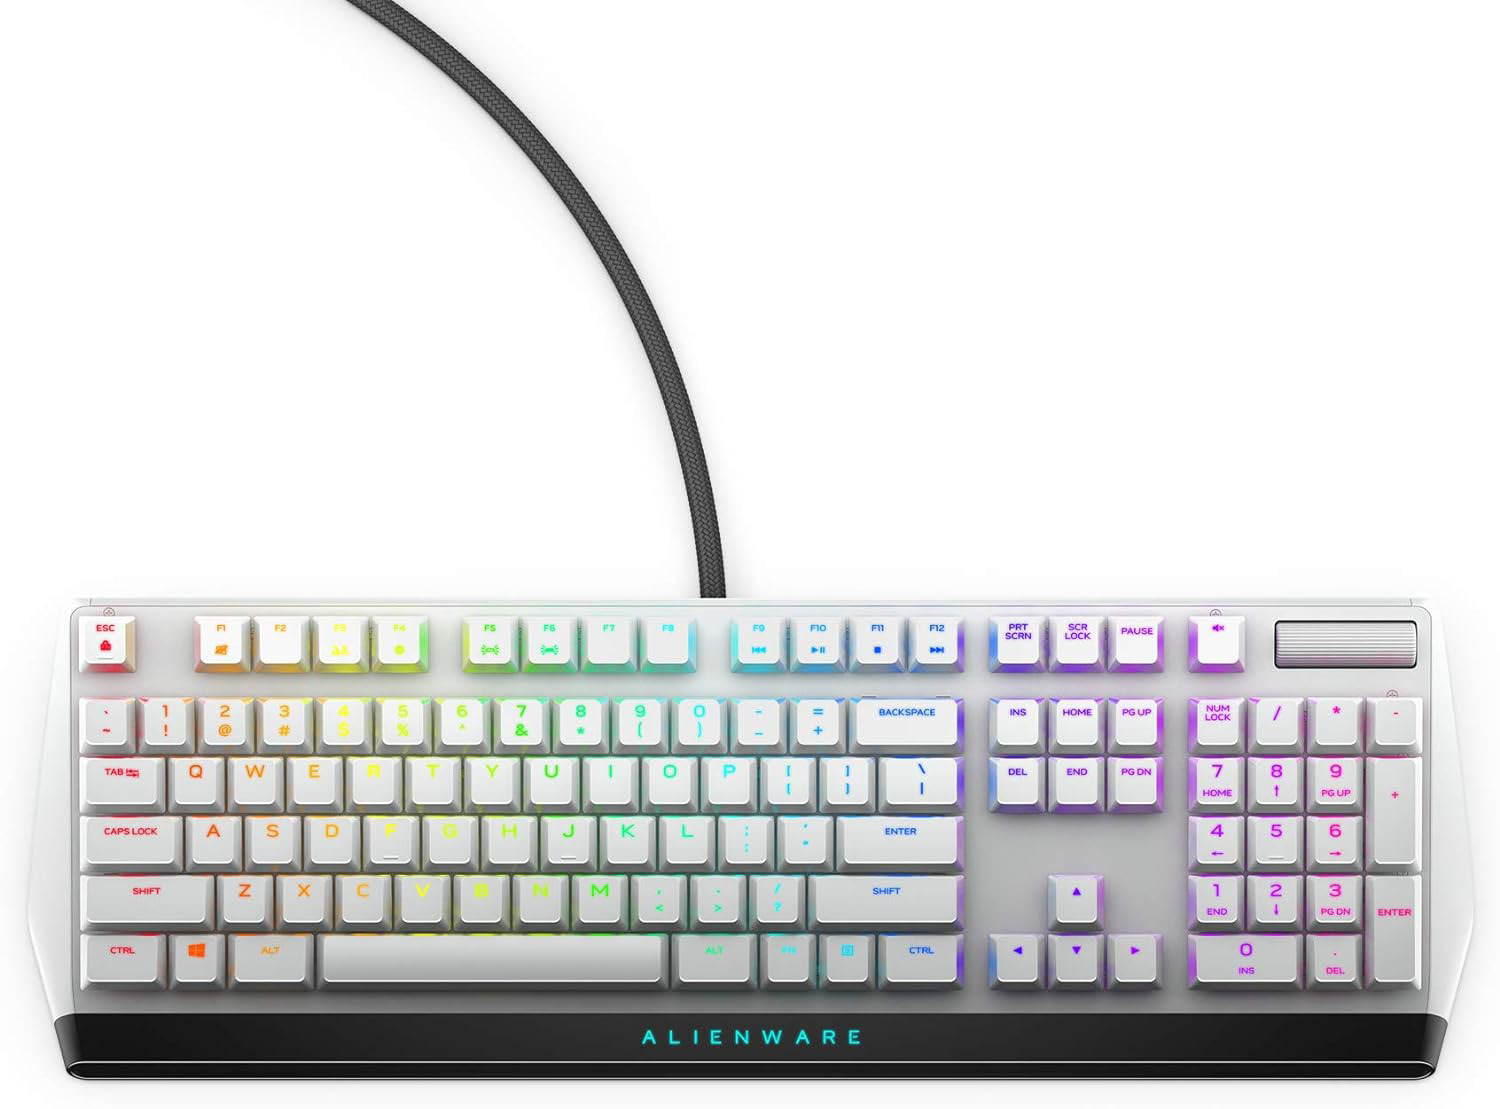 Alienware Low-Profile RGB Gaming Keyboard AW510K Light, Alienfx Per Key RGB and